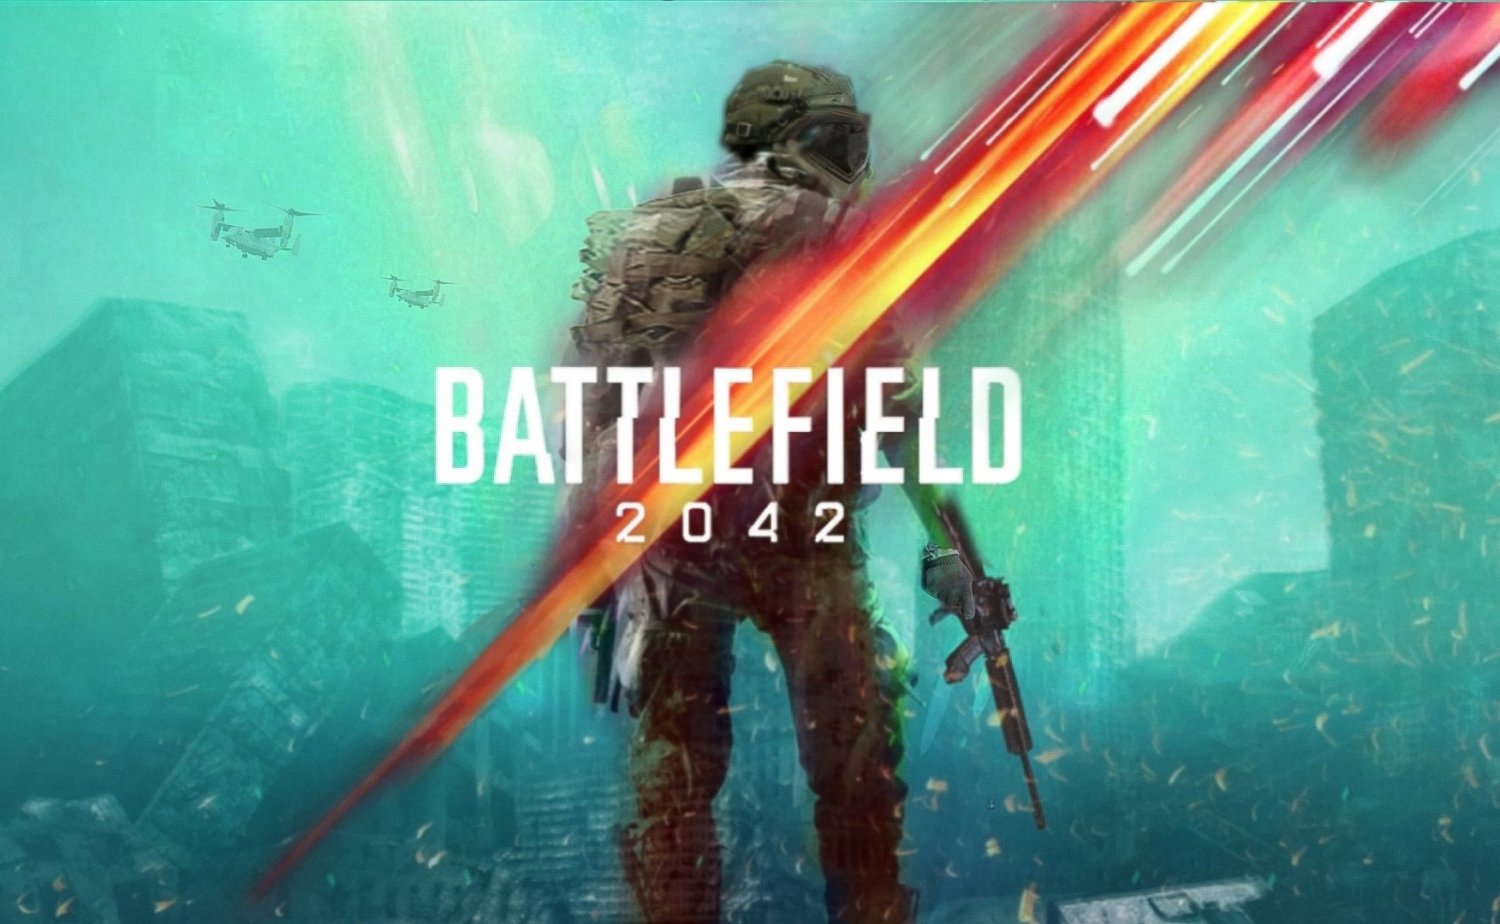 Battlefield 2042 NEW Gameplay Open Beta 